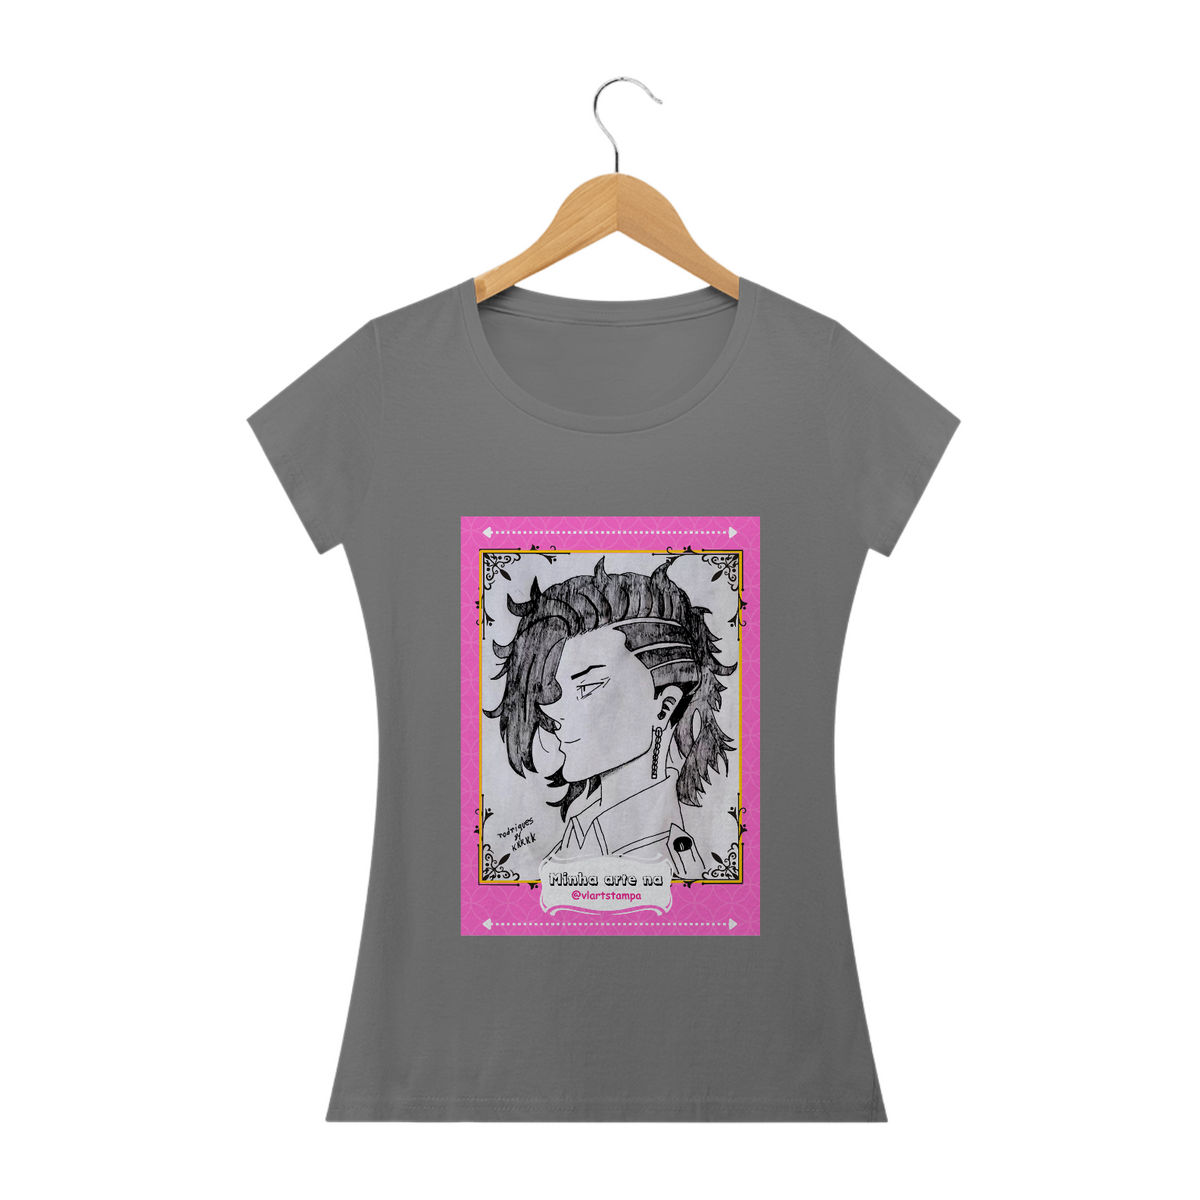 Nome do produto: VL ART ESTAMPA + ARTISTAS - Leidiane Rodrigues - MG - camiseta baby estonada